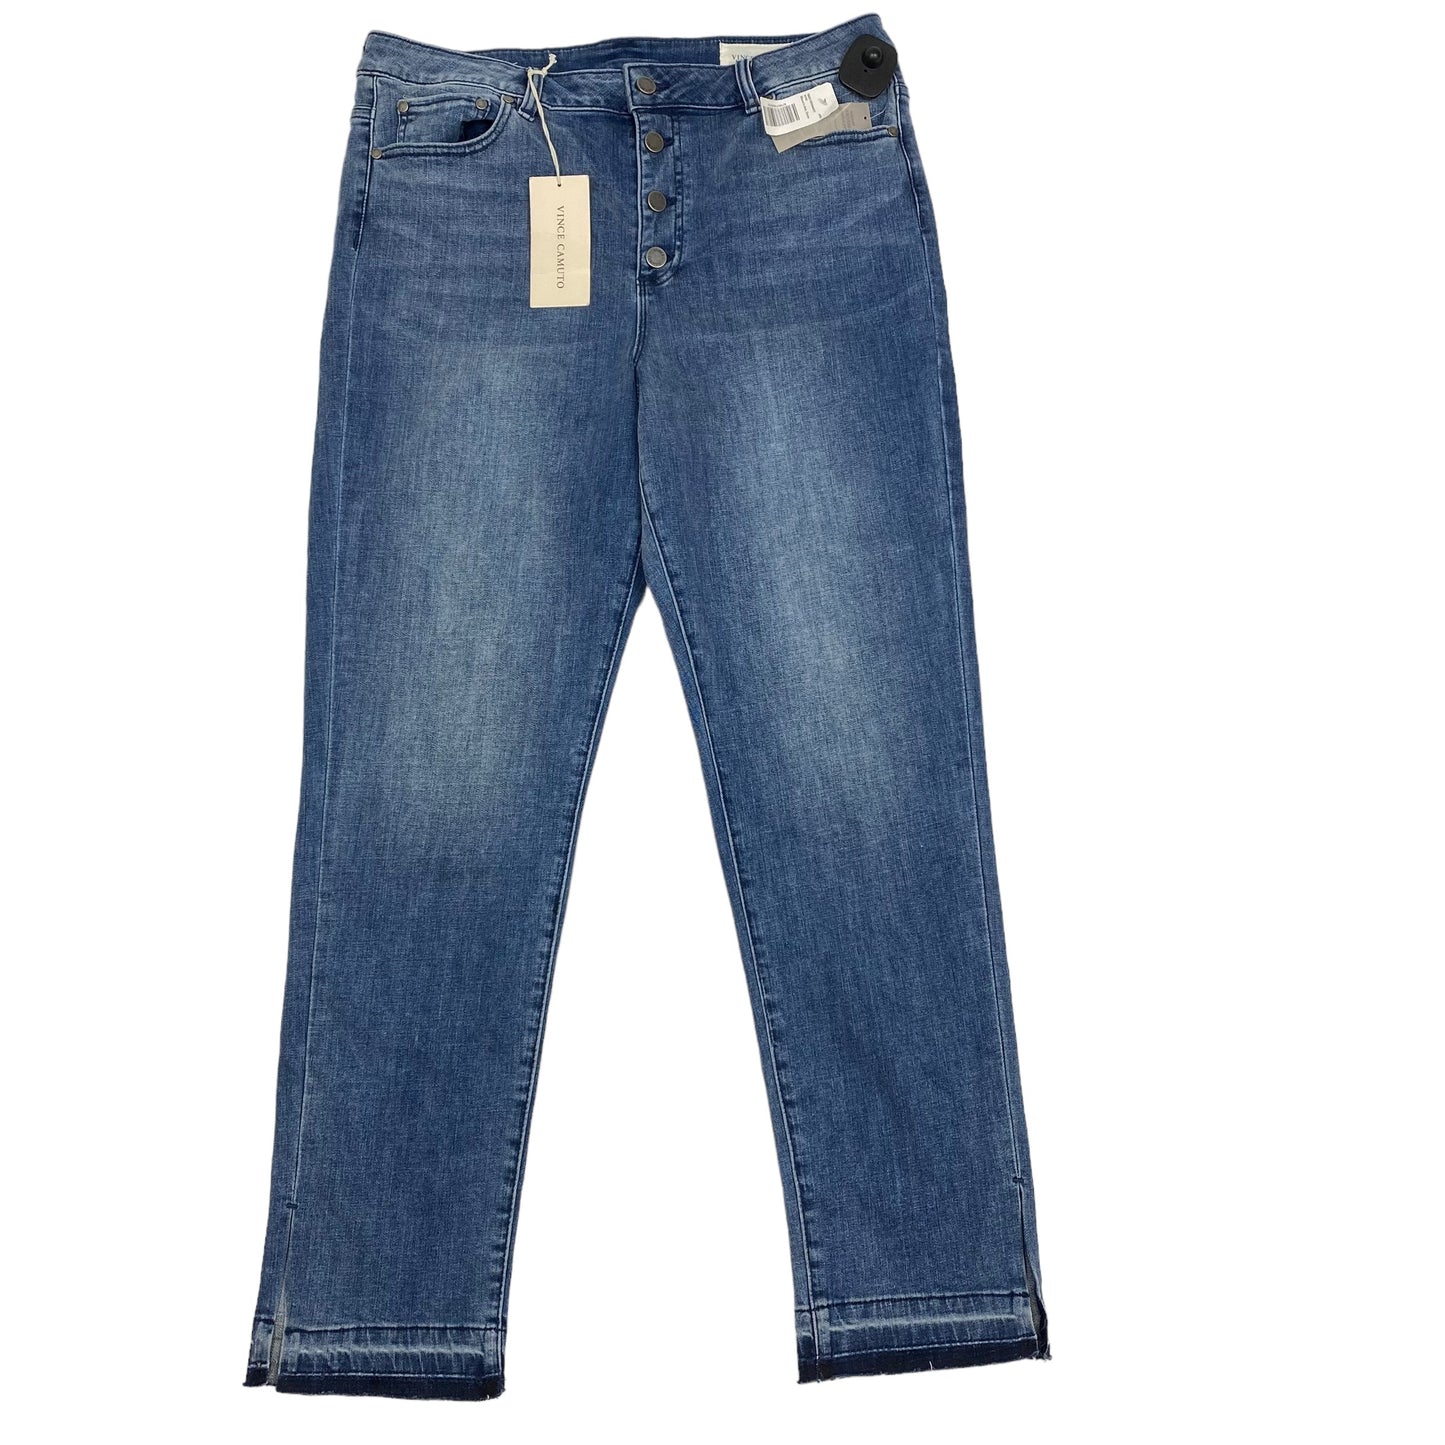 Blue Denim Jeans Straight Vince Camuto, Size 14